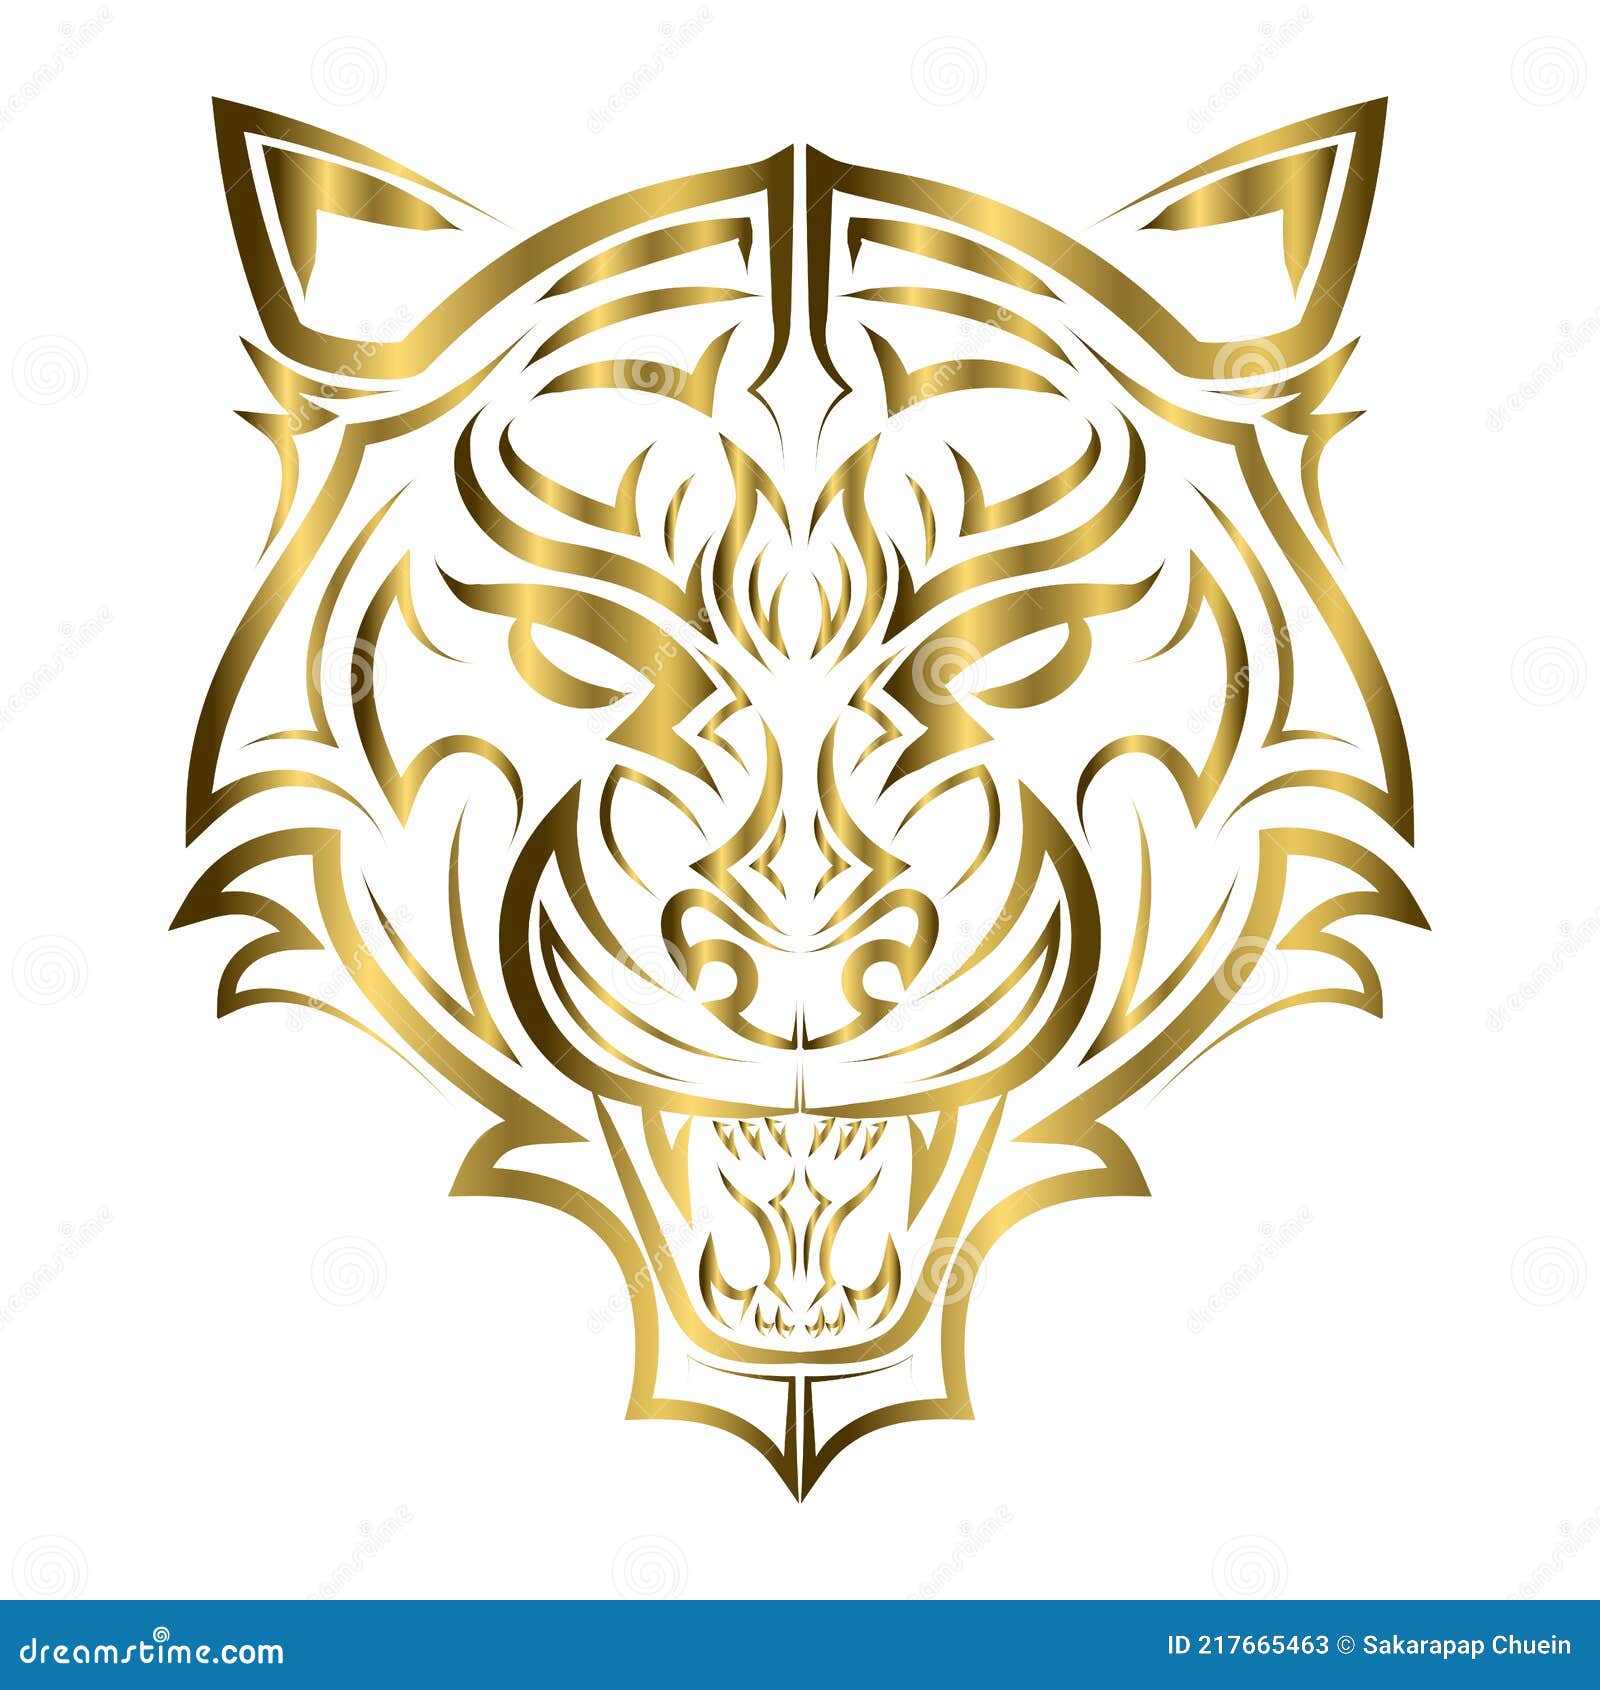 Tiger 3D Cool T-shirt Personality Men's Animal Art Tiger T-shirt